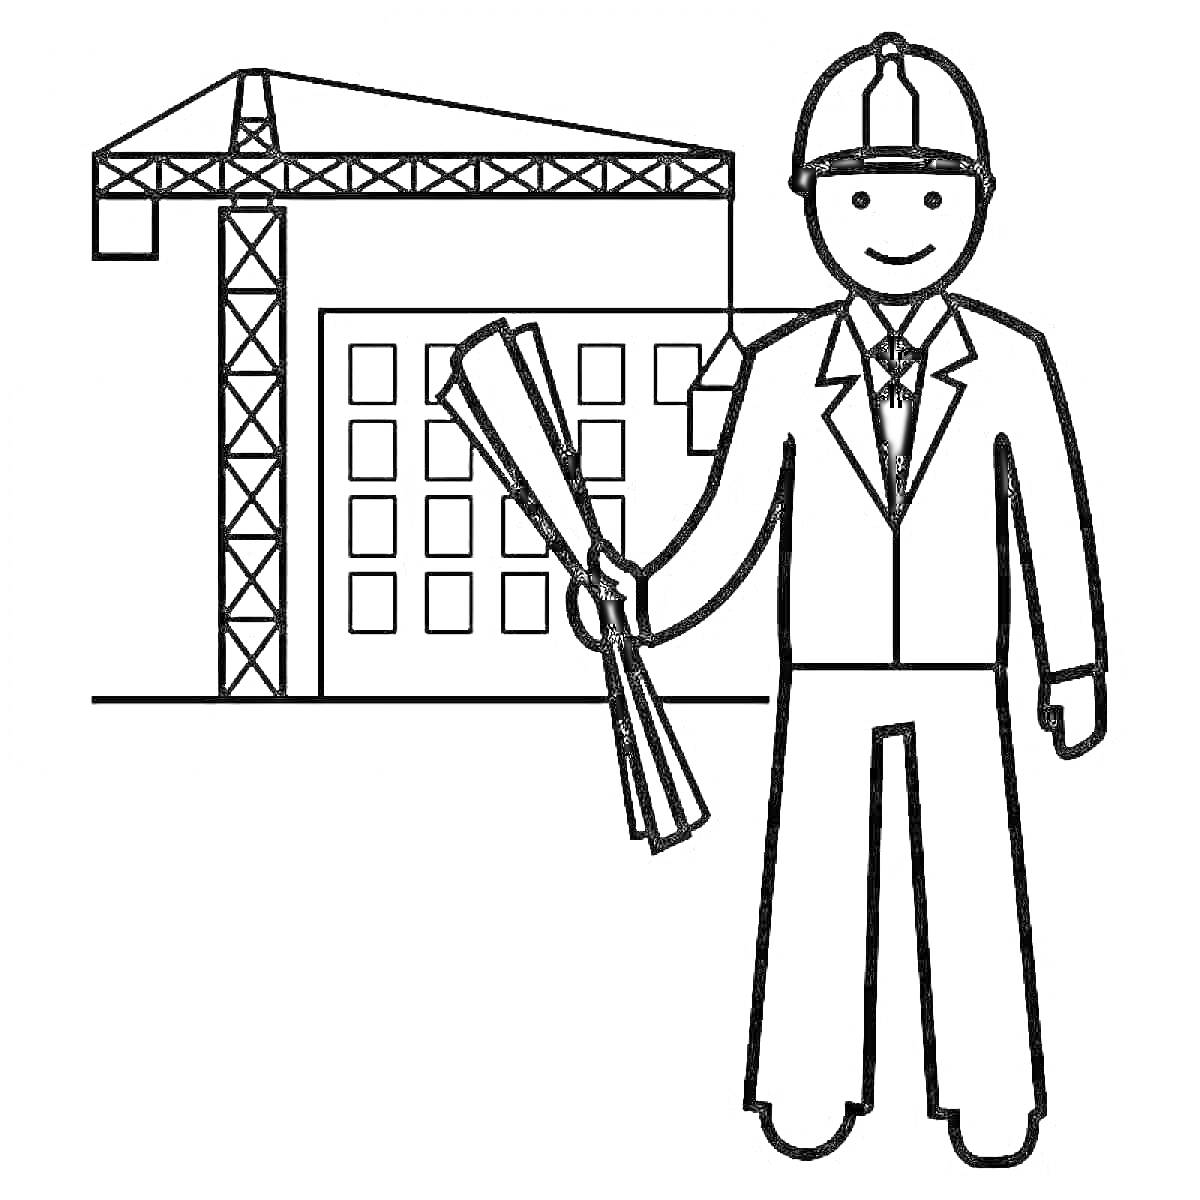 Инженер на фоне стройки с краном и зданием, с чертежами в руках